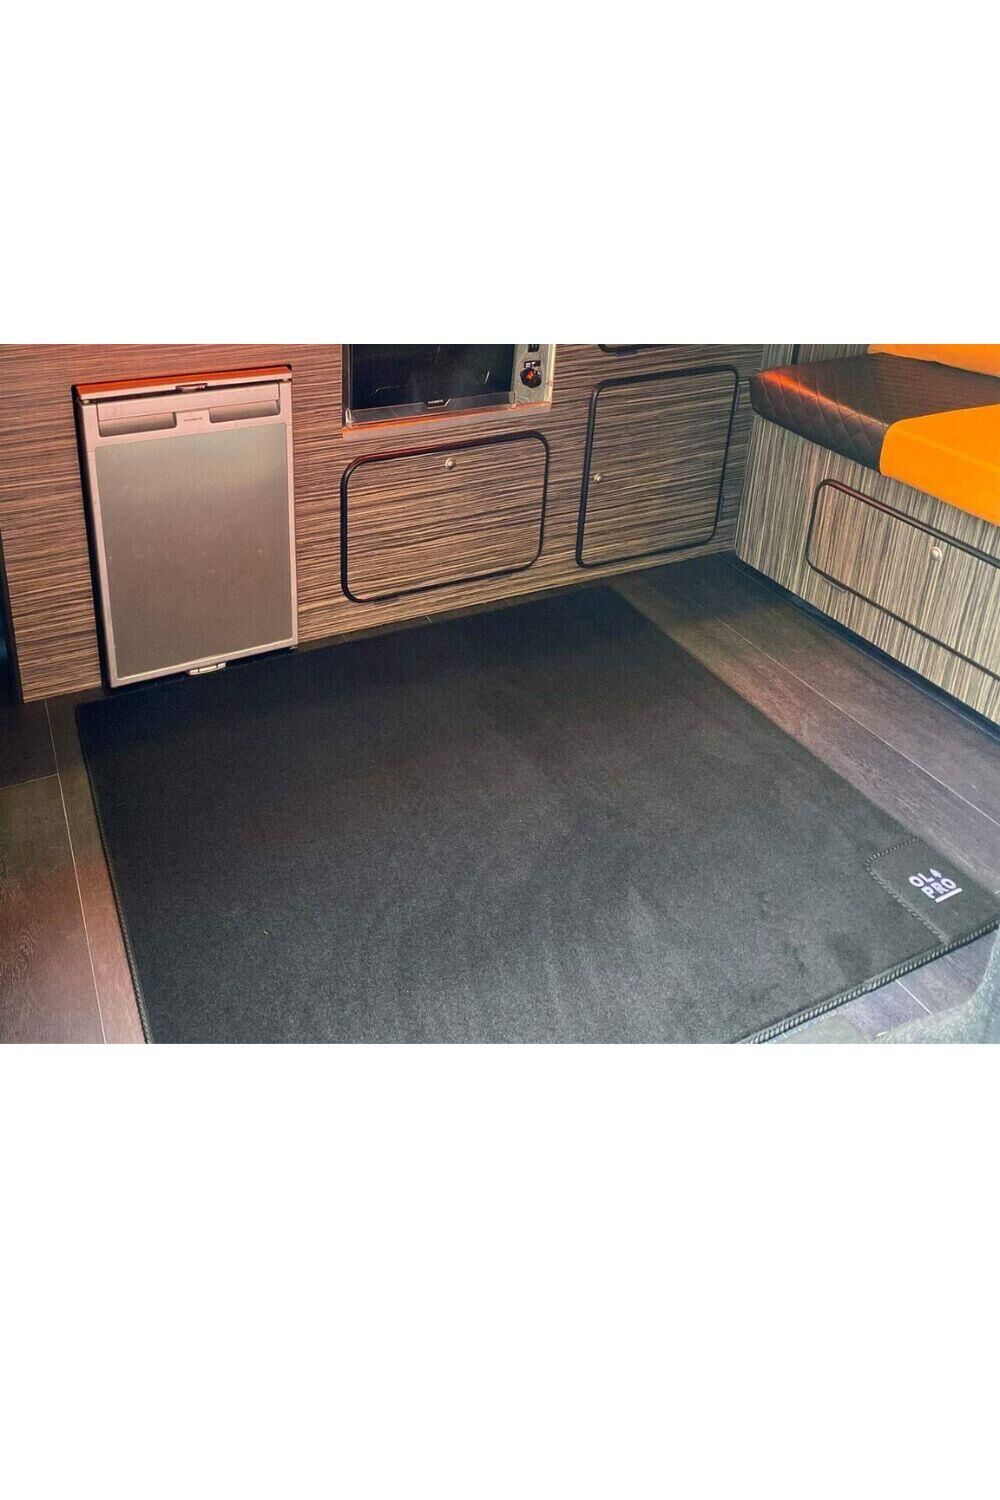 OLPRO OLPRO Rear Campervan Living Area Carpet 1m x 1.2m